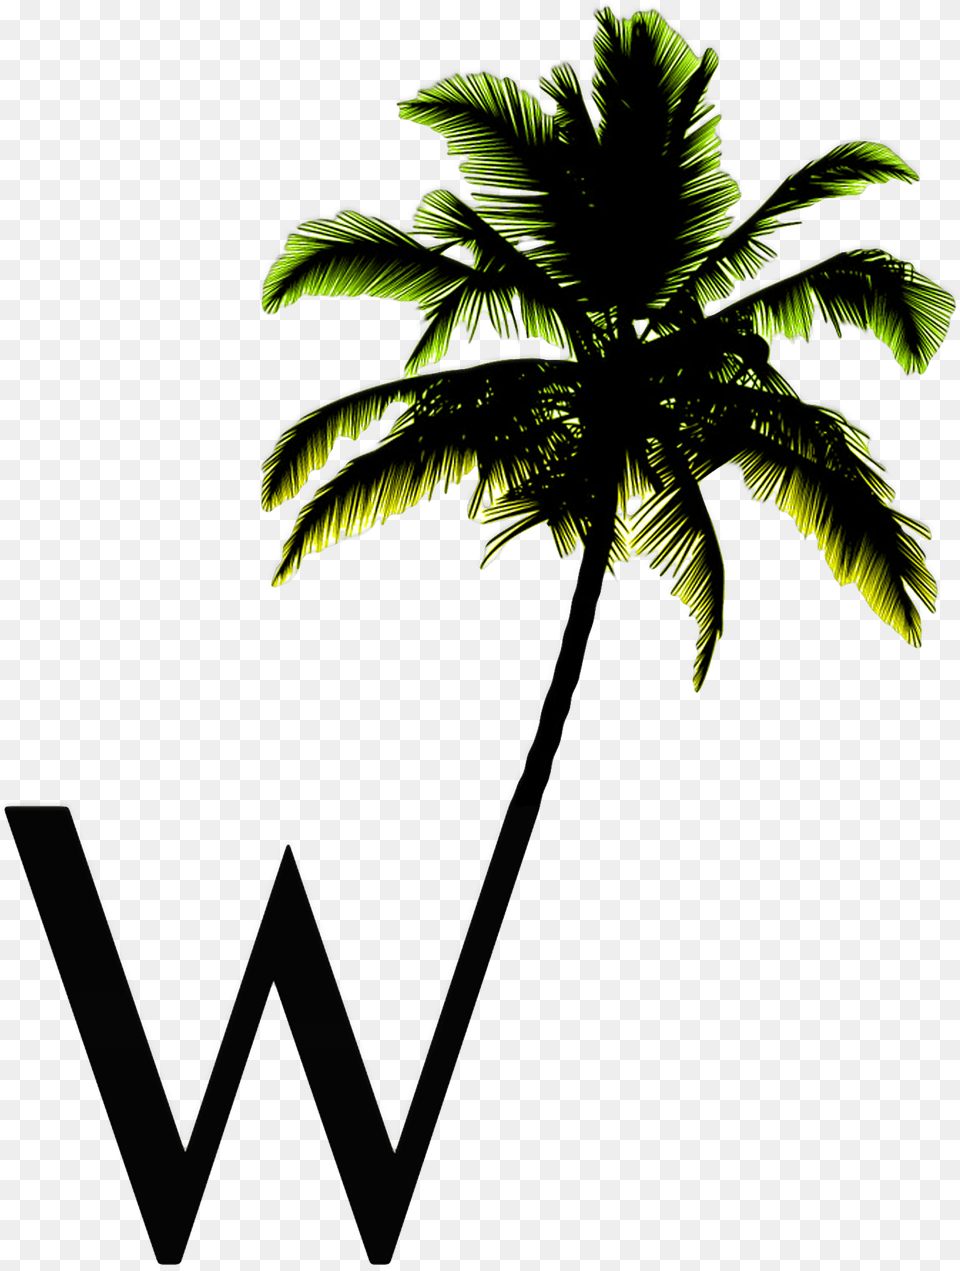 W Palm Only Logo No Background Palm Tree Silhouette, Leaf, Palm Tree, Plant, Vegetation Png